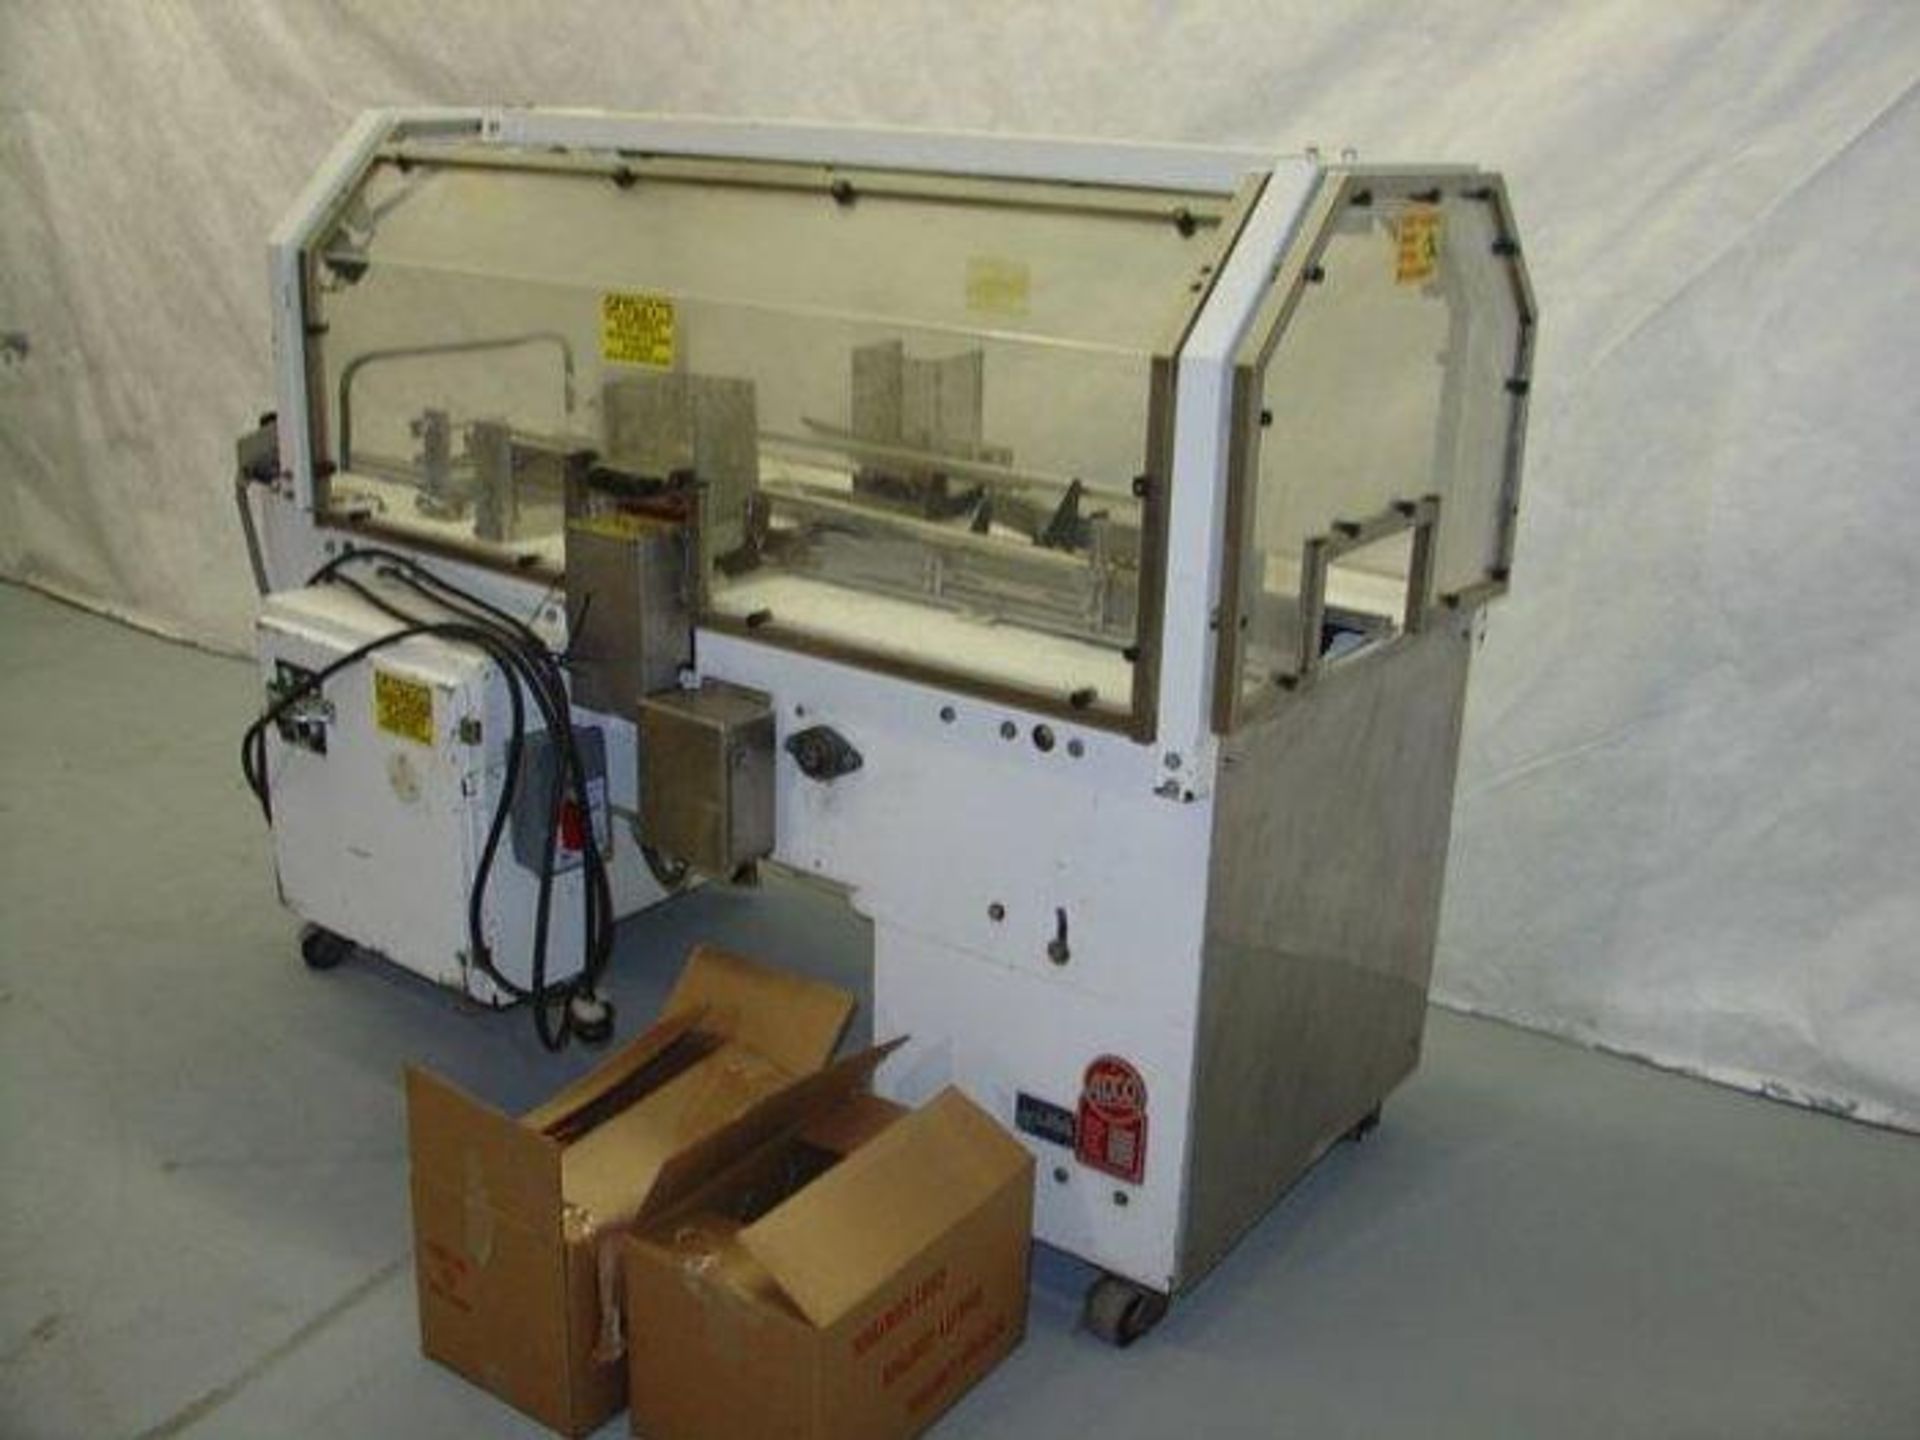 ADCO hand feed carton sealer model 15CHL-EC - Image 3 of 6